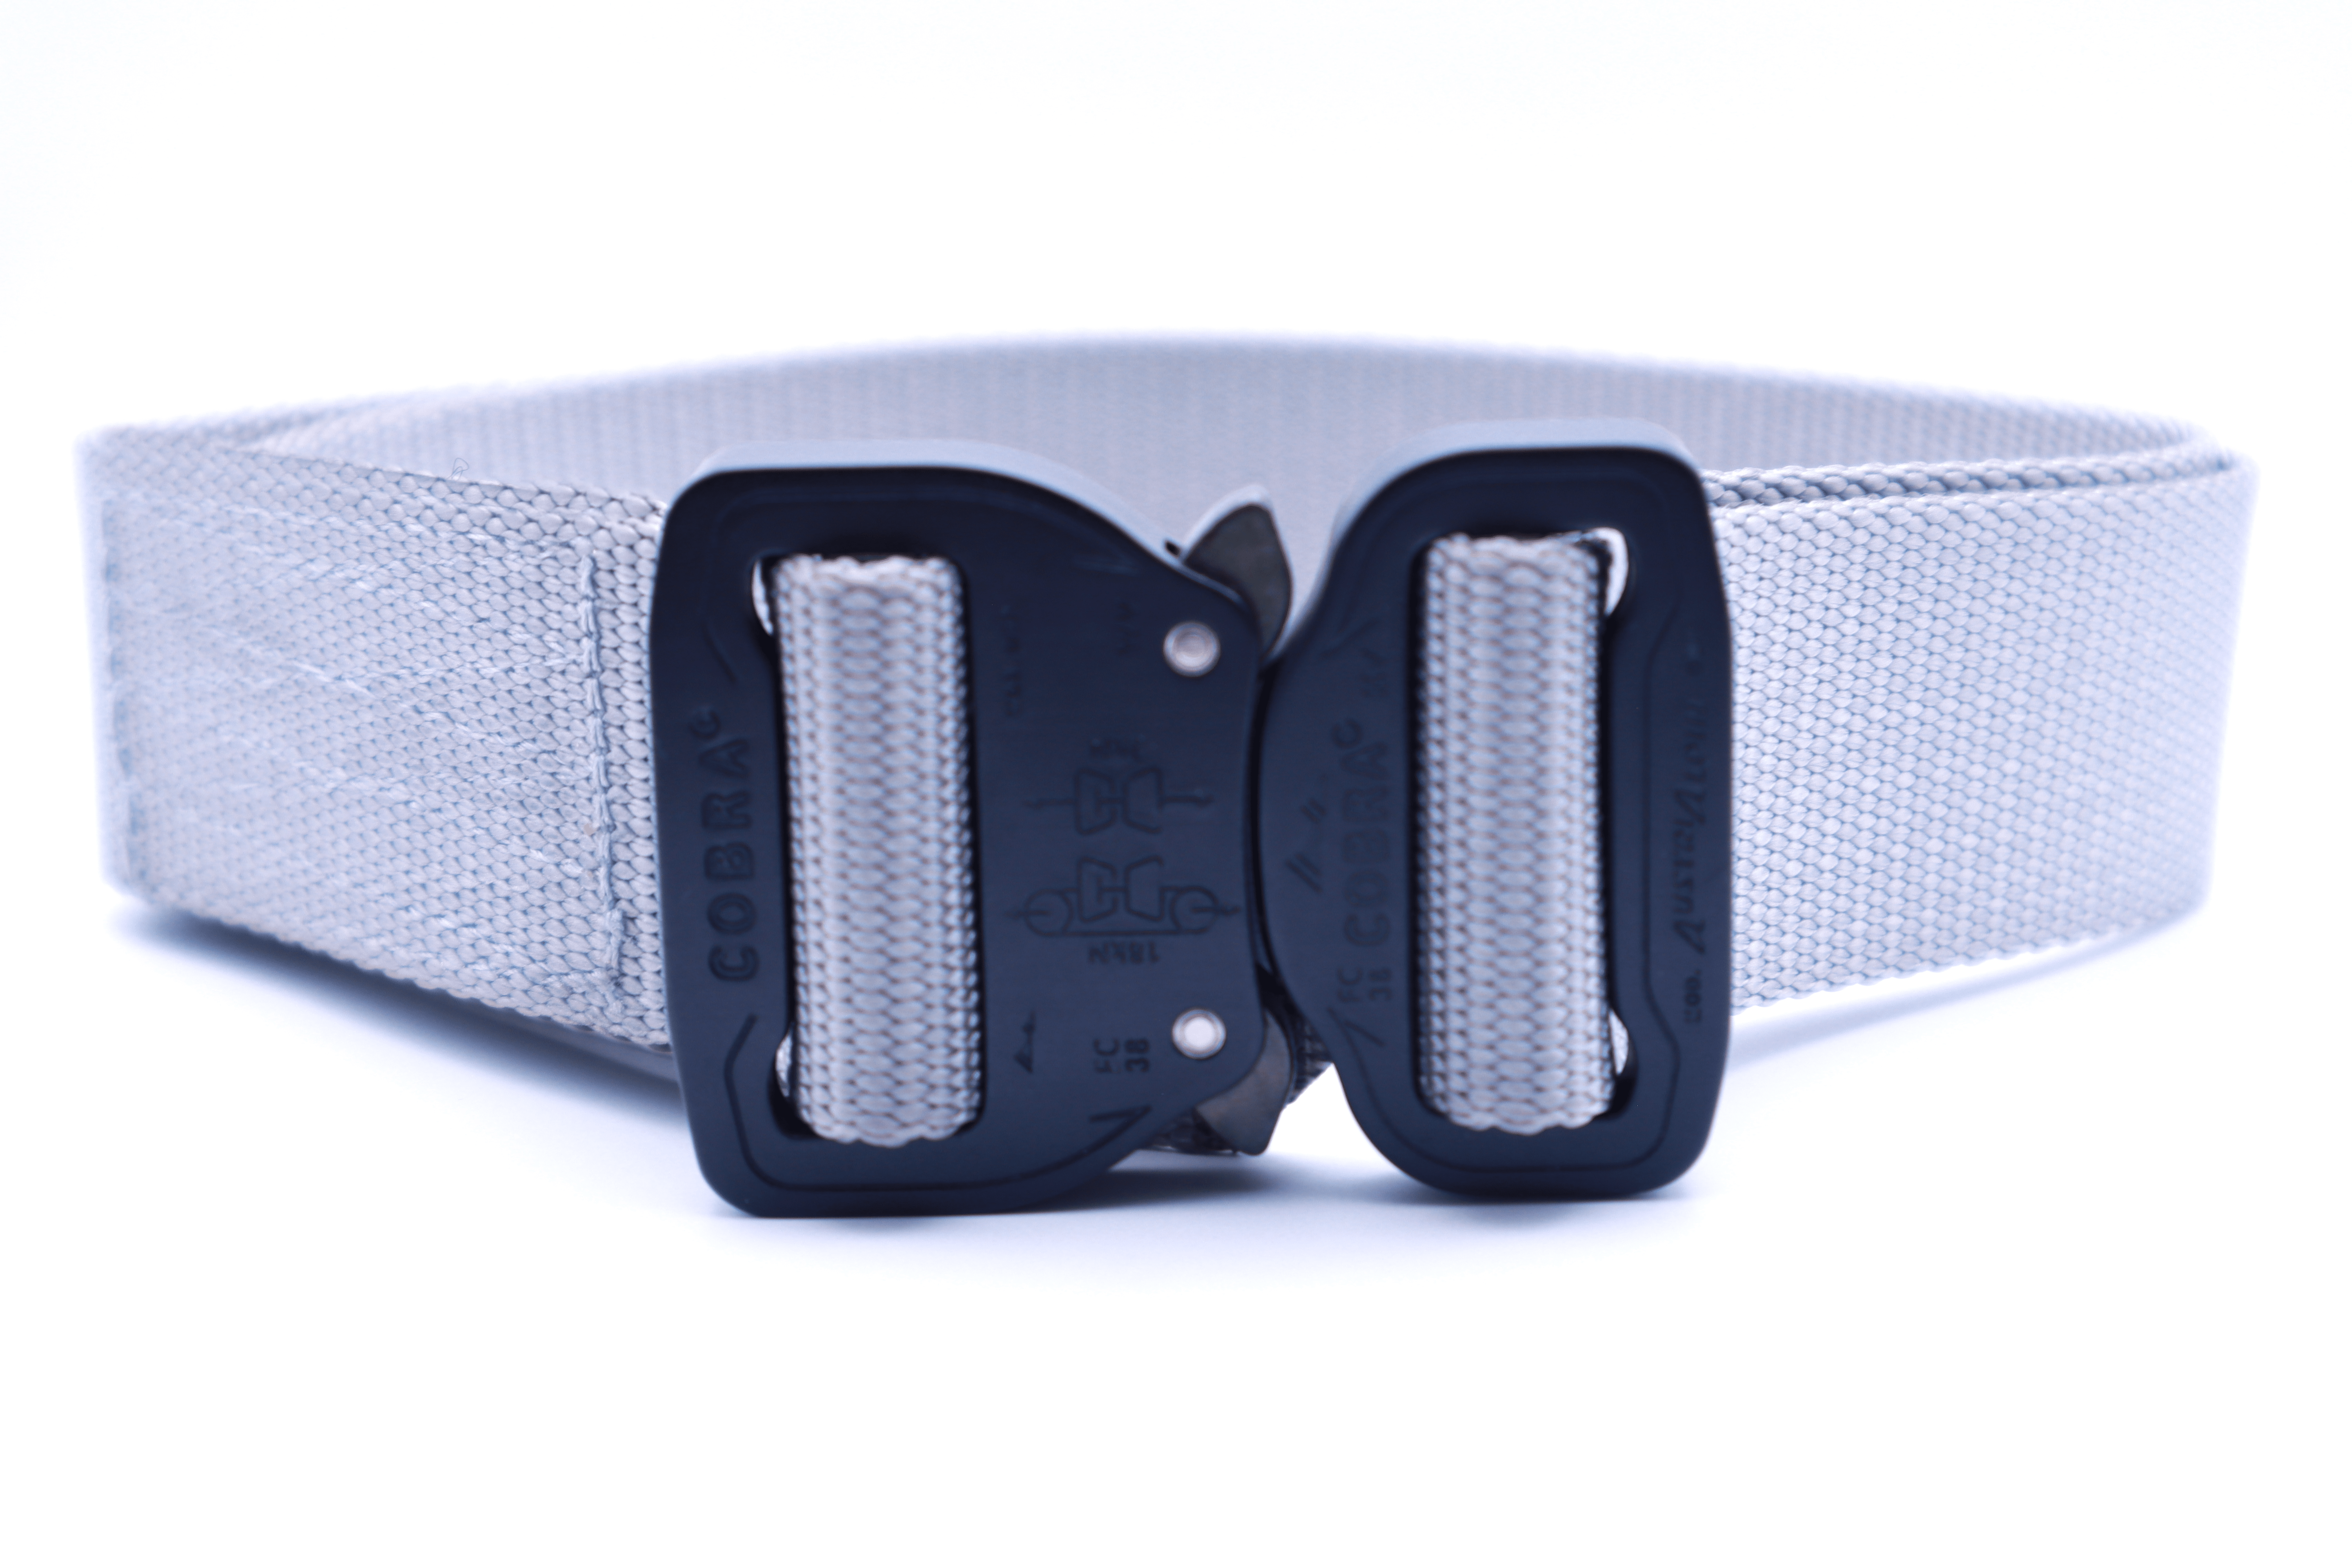 Belt Buckles: Why You Need a Belt With a Cobra® Buckle – Klik Belts